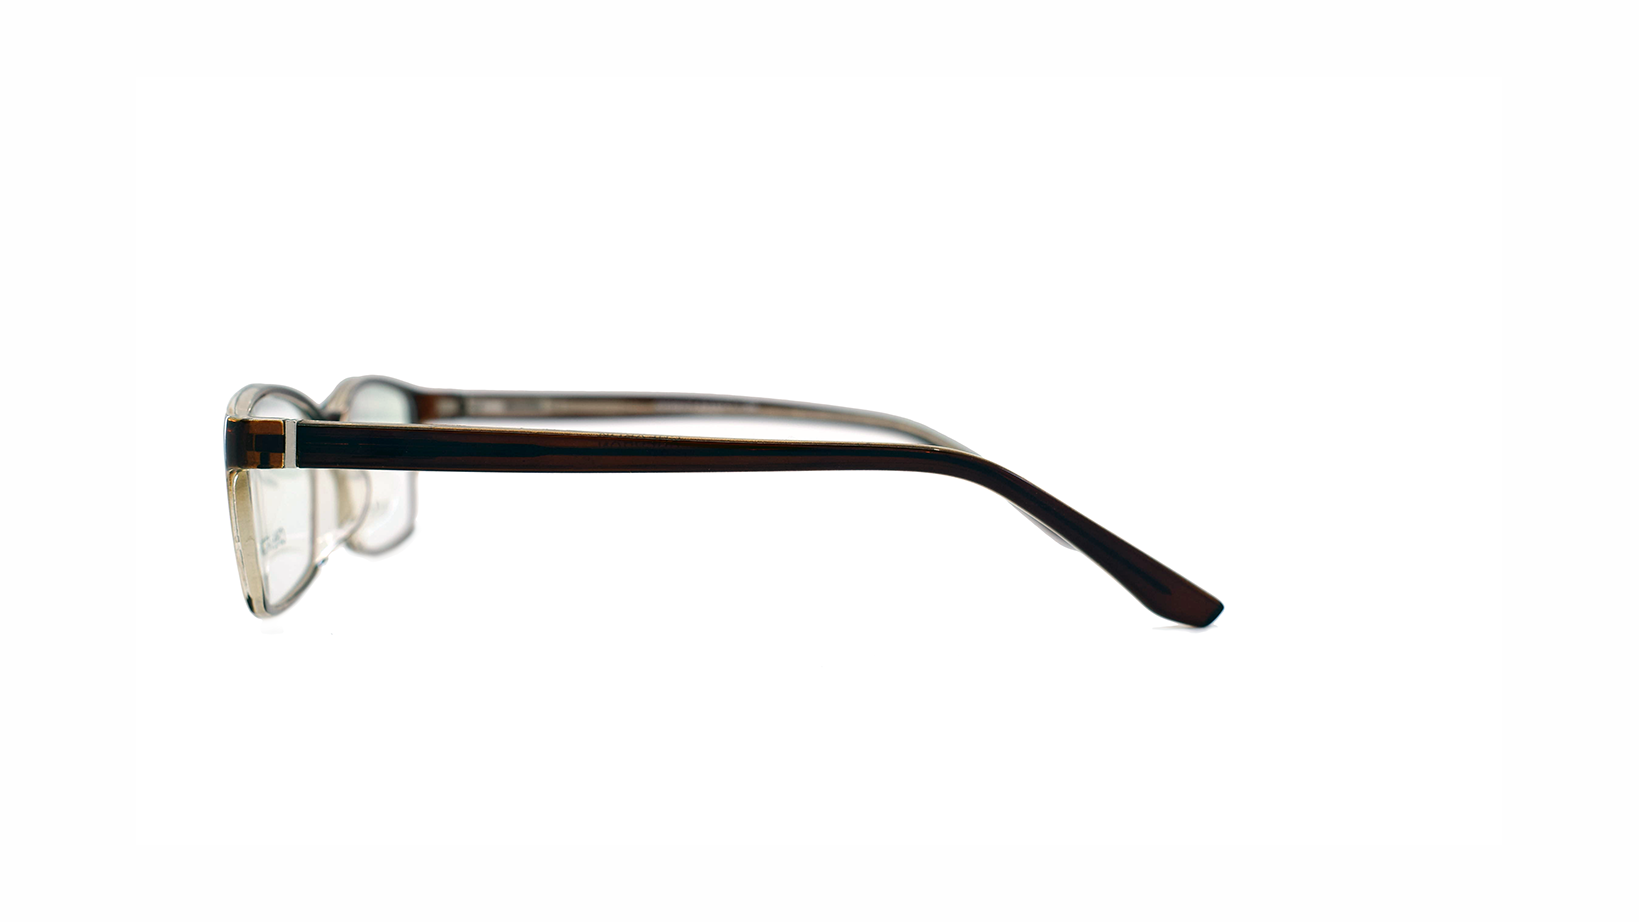 Native Eyewear Full Frame Plastic Eyeglasses 9927